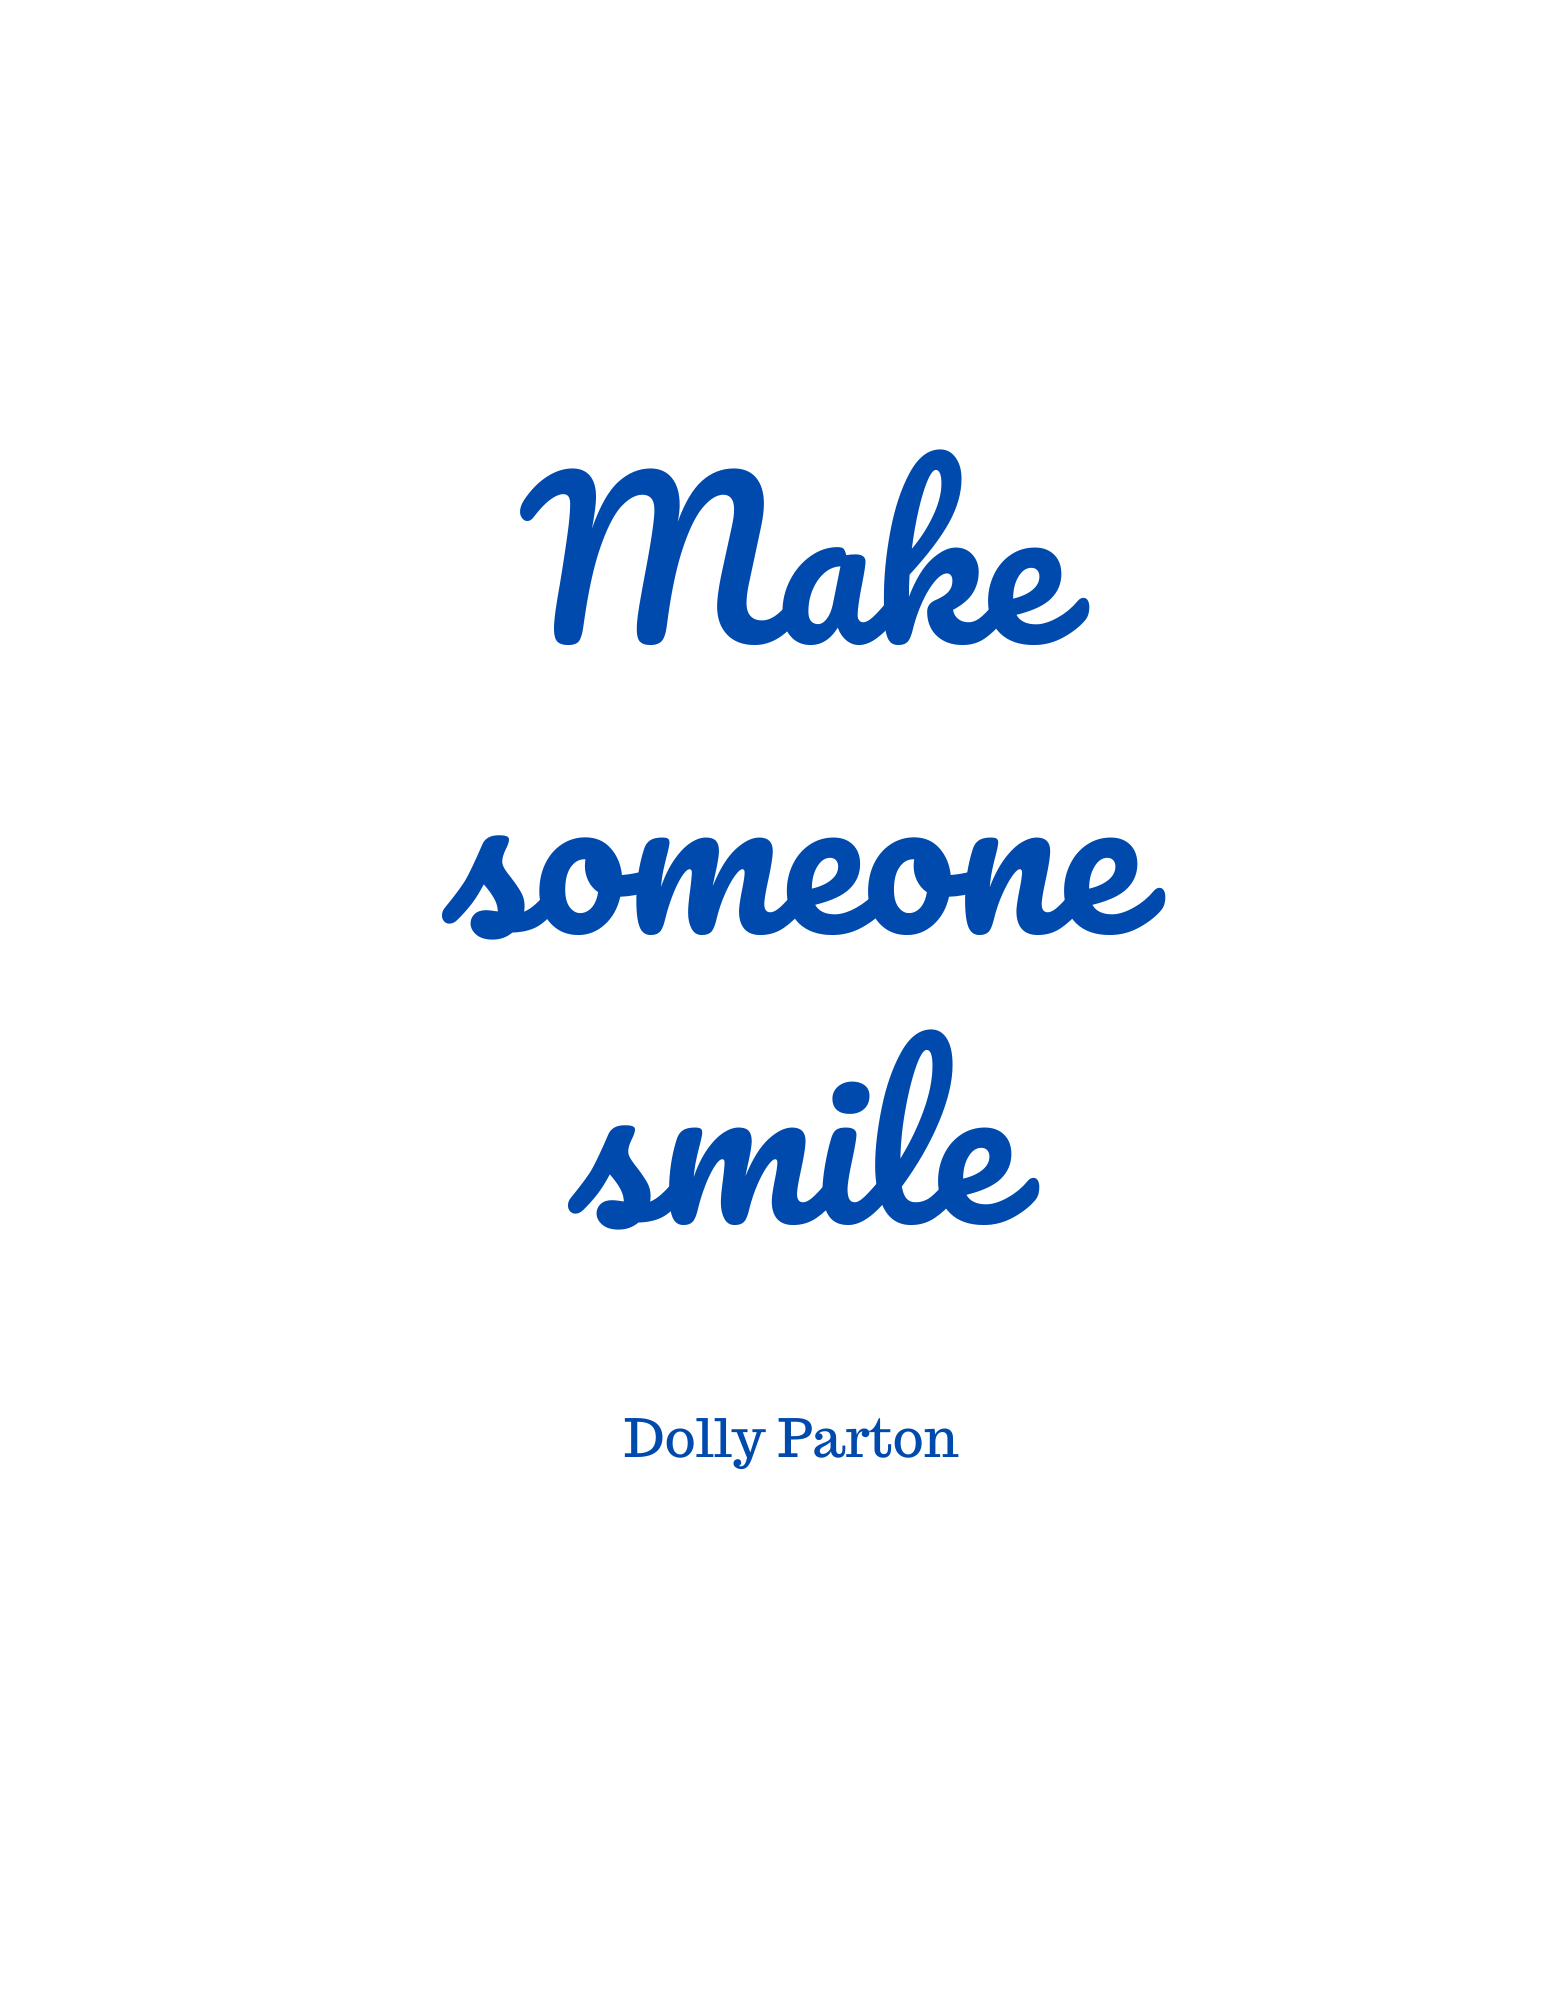 Make someone smile - Dolly Parton